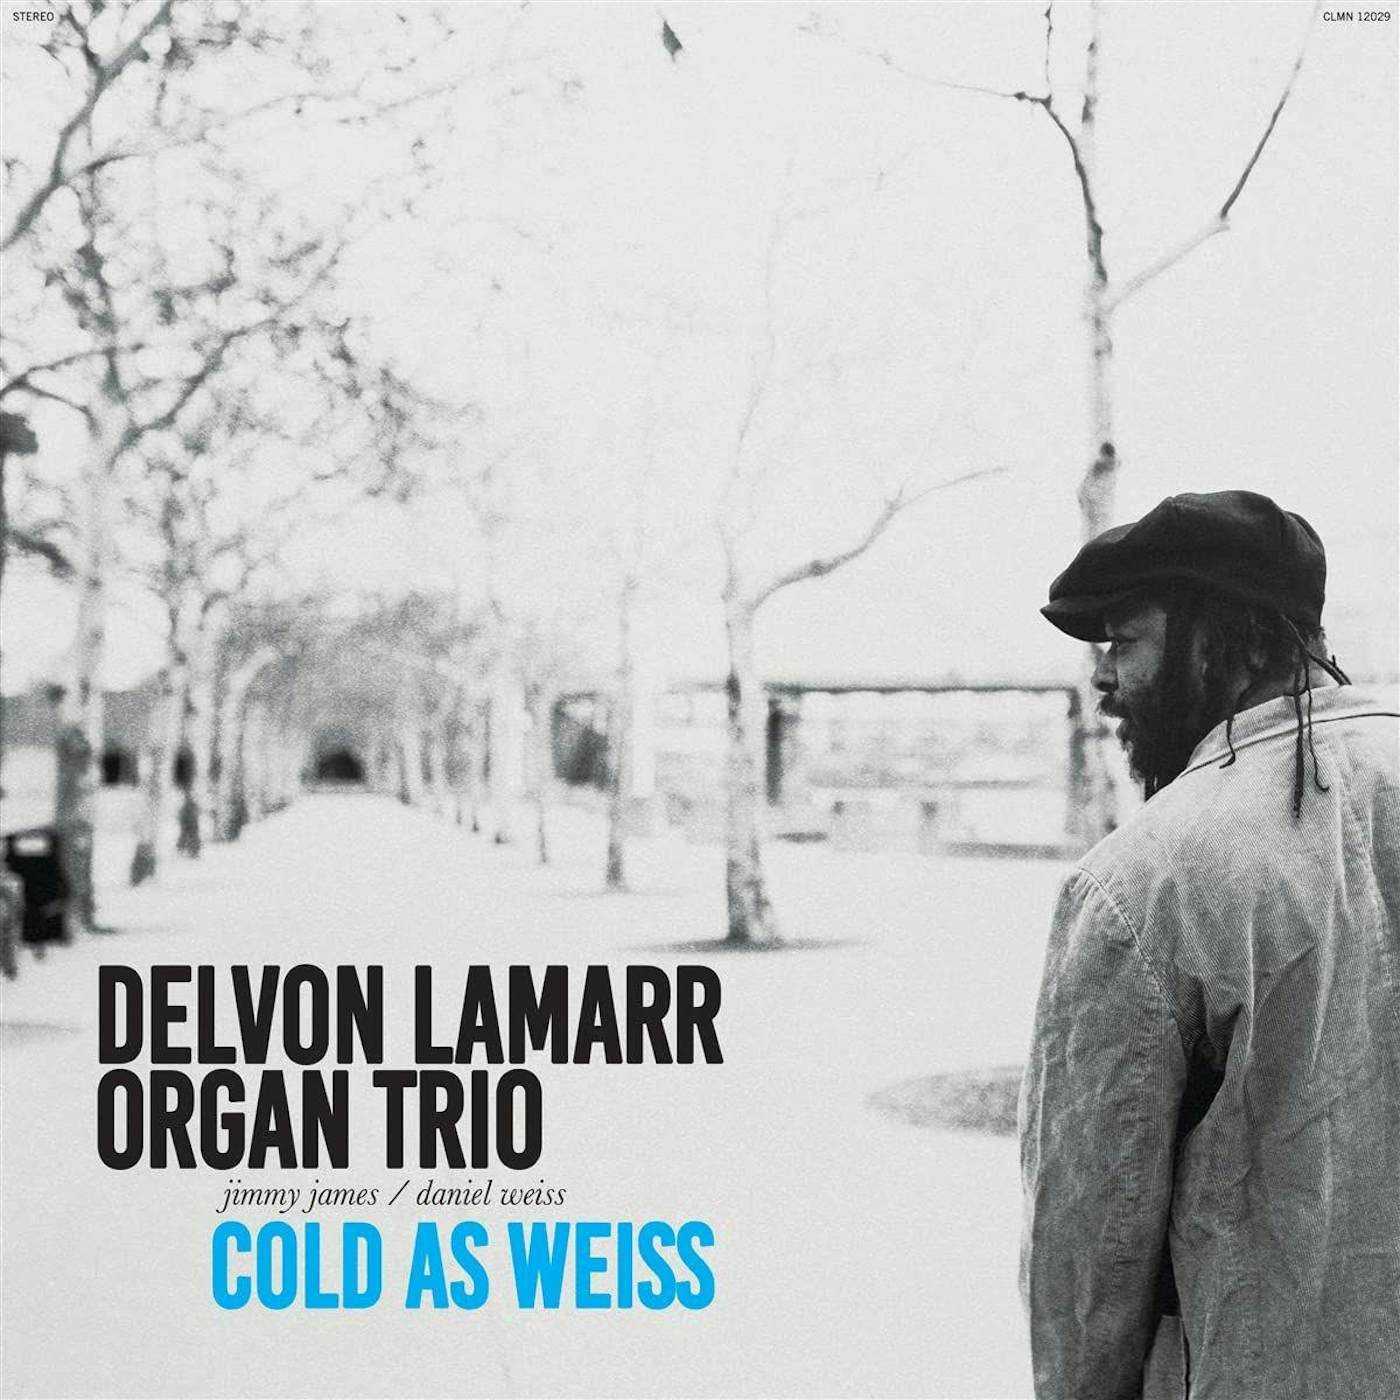 Delvon Lamarr Organ Trio Cold as Weiss - Red Vinyl Record